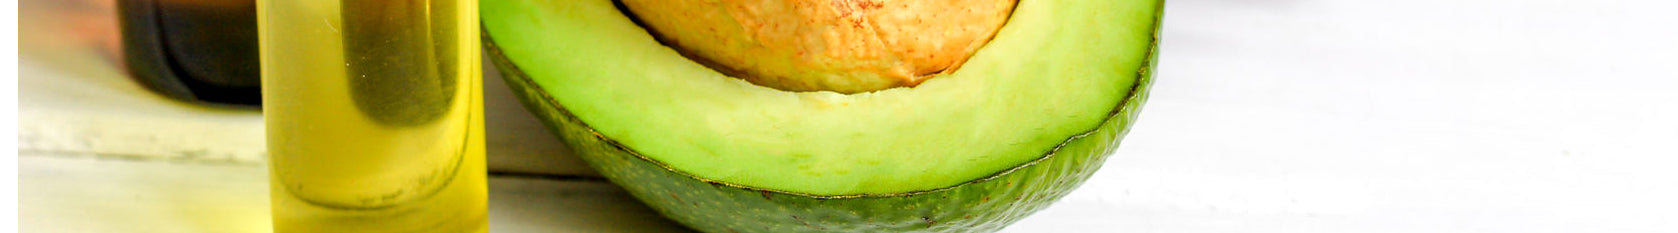 benefits of avocado oil on skin